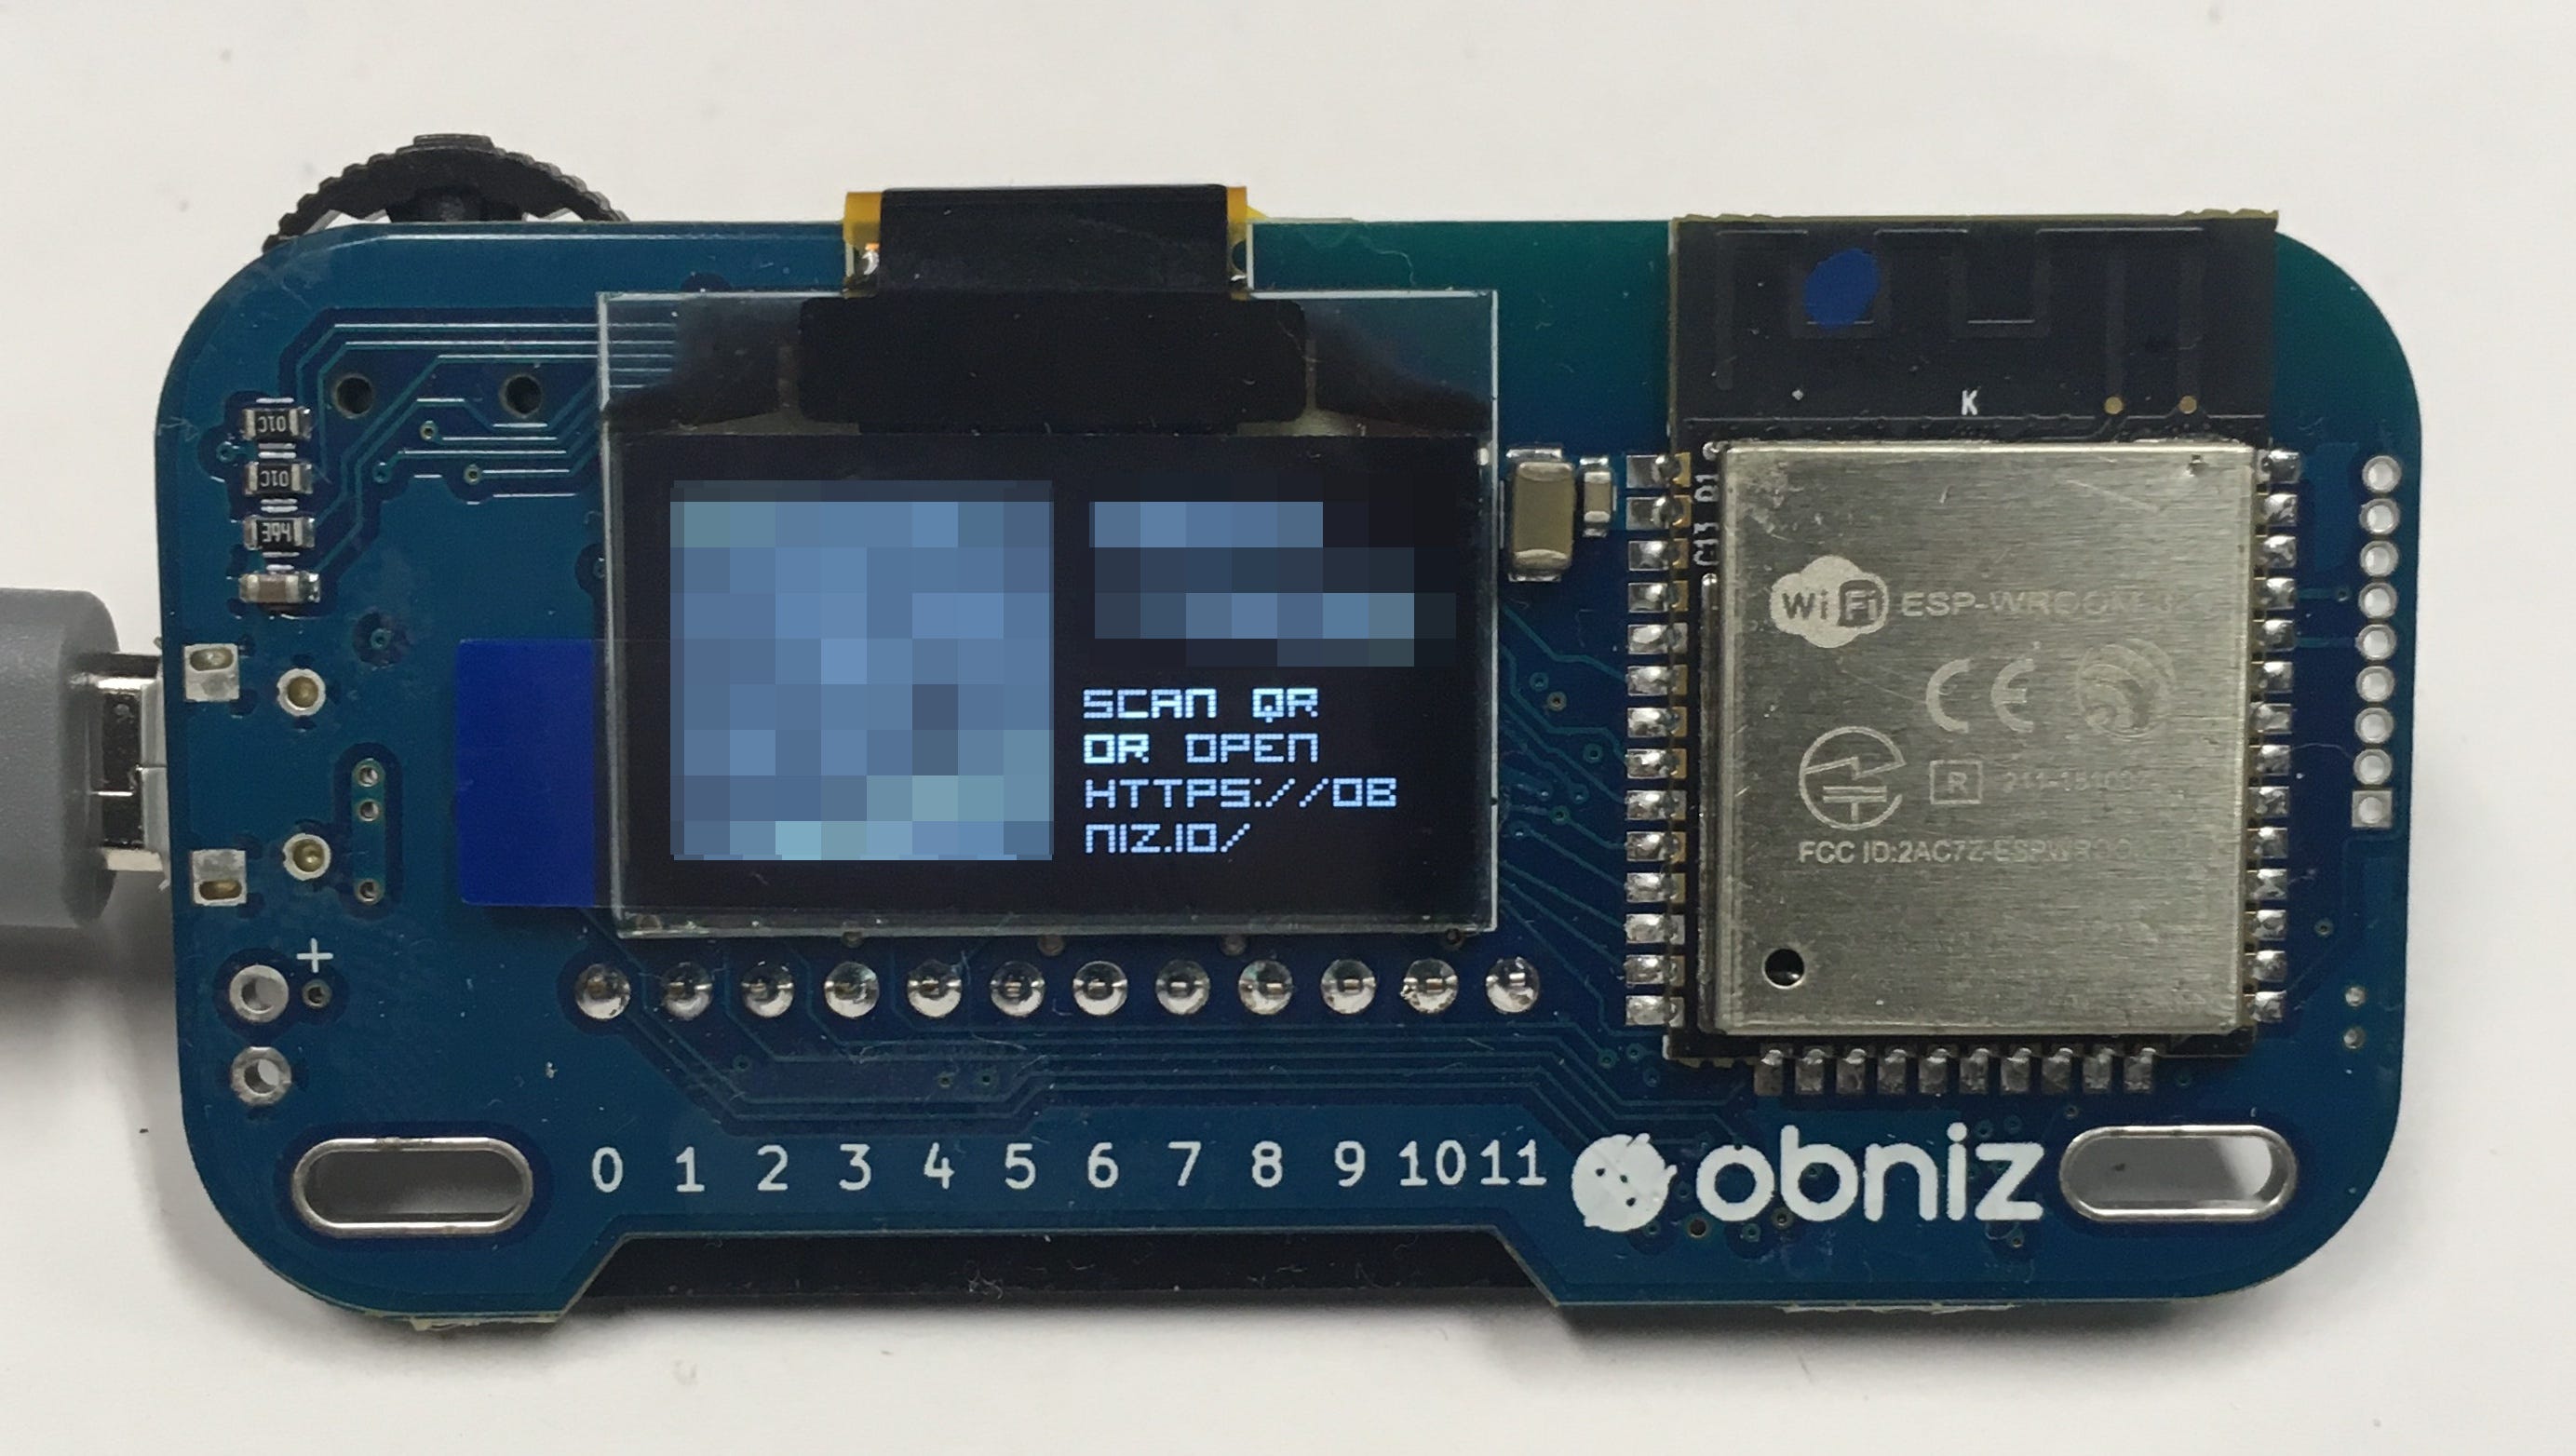 obniz (オブナイズ) - クラウドベースのIoT開発ボード. クラウドの無料